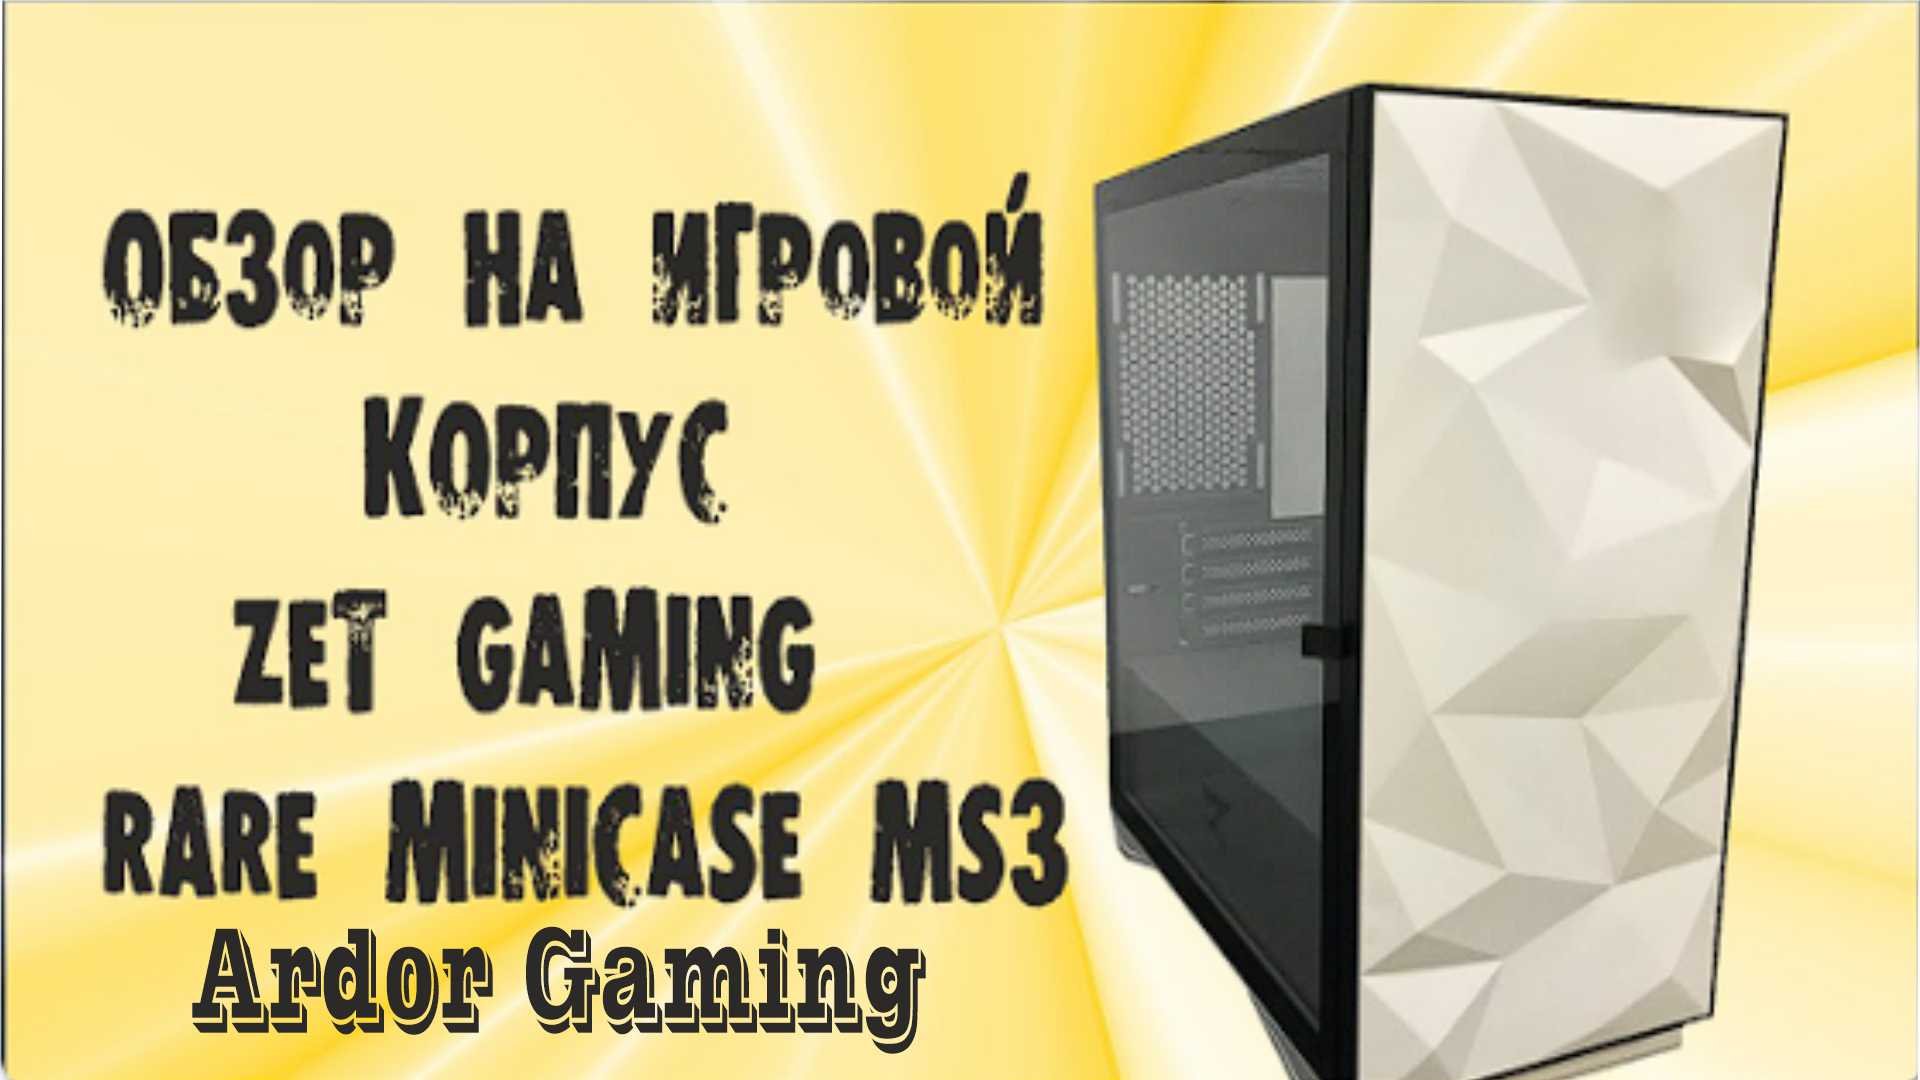 Ardor gaming rare ms2 wg. Корпус zet ms3. Zet Gaming rare Mini Case ms3. Корпус zet Gaming rare Minicase ms1. Корпус zet Gaming rare Minicase ms3 Mesh WG ARGB.